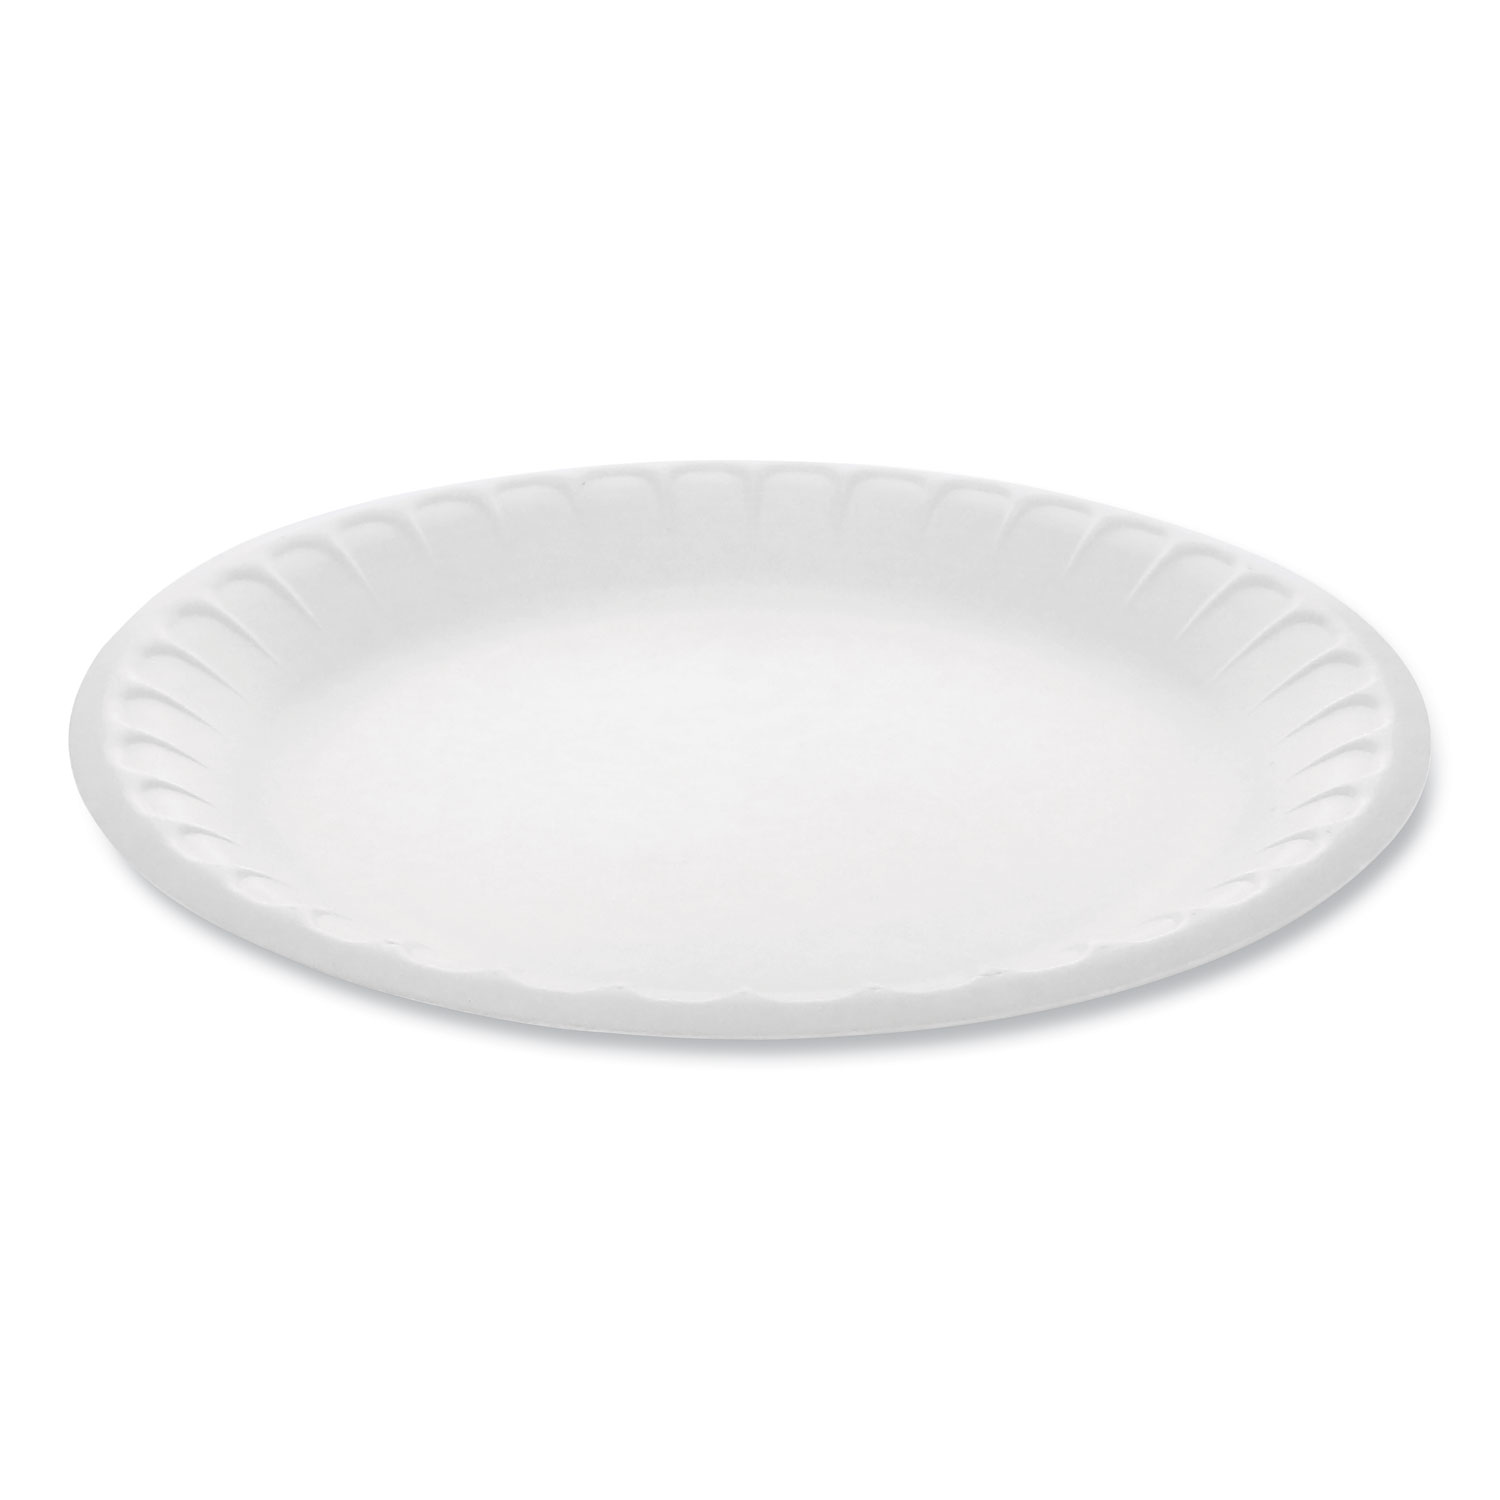 Pactiv Unlaminated Foam Dinnerware, Plate, 9 Diameter, White, 500/Carton